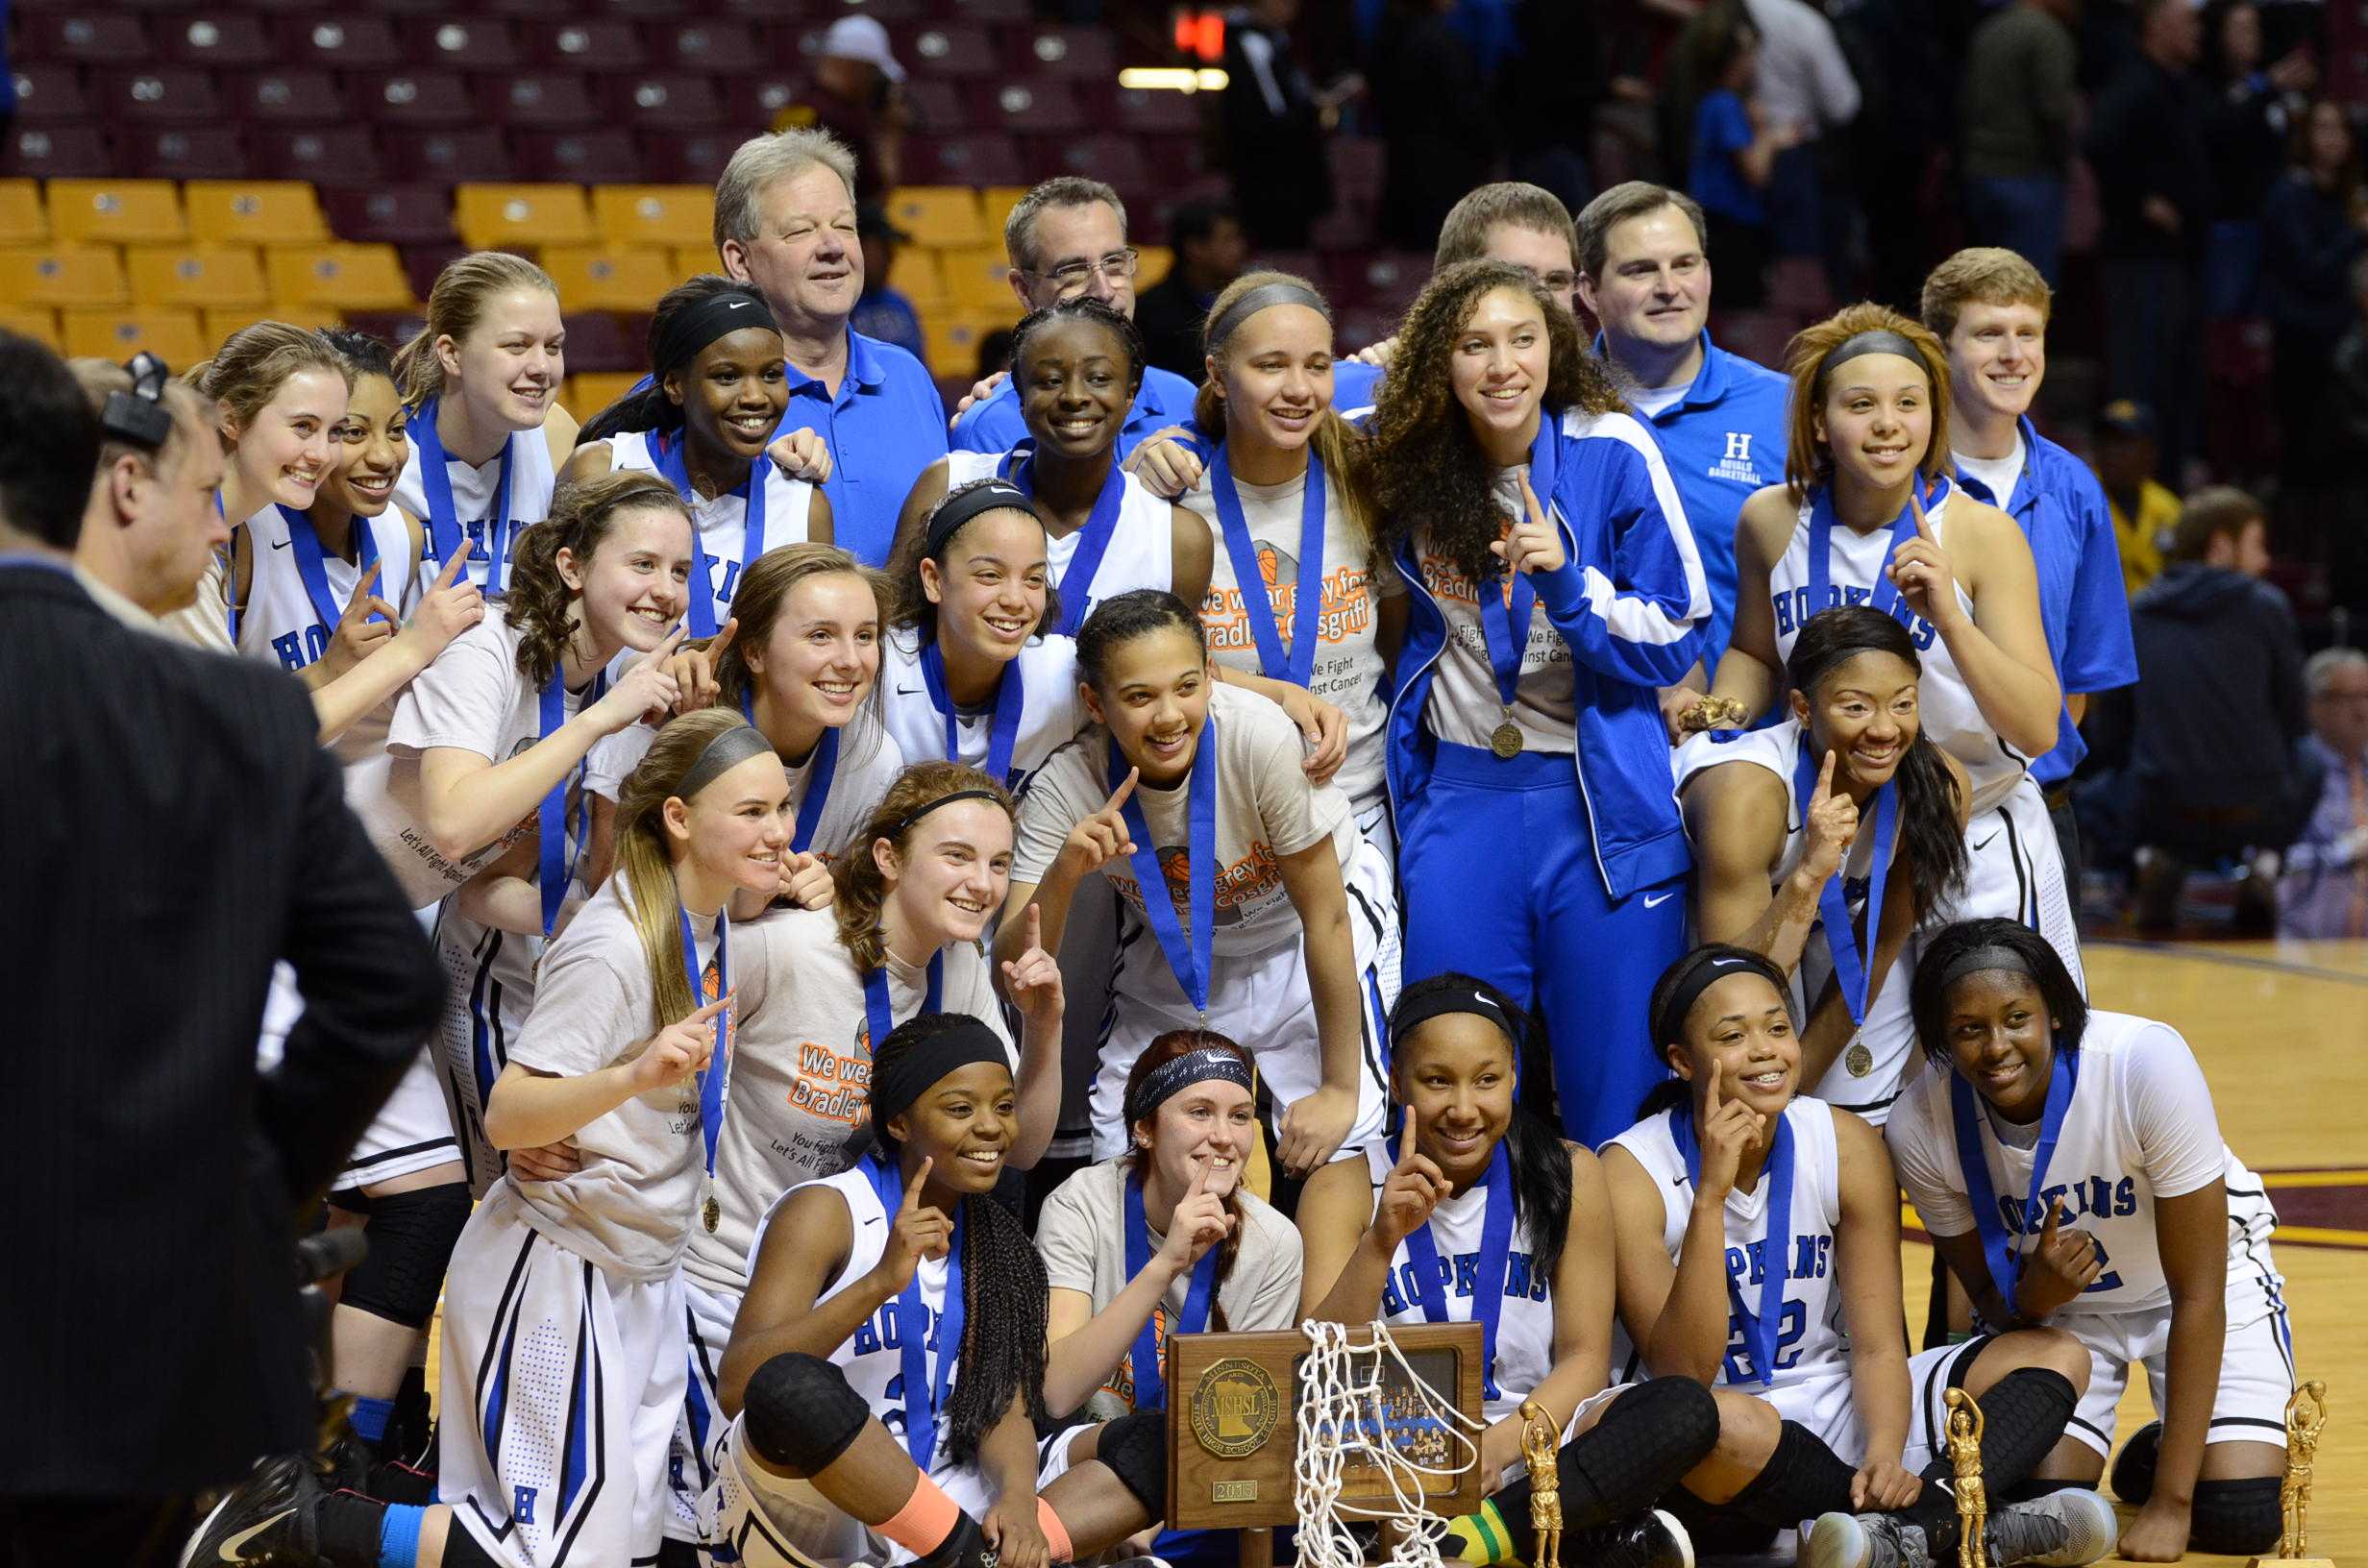 All Champion Team. High School girls Basketball Teams. Win state